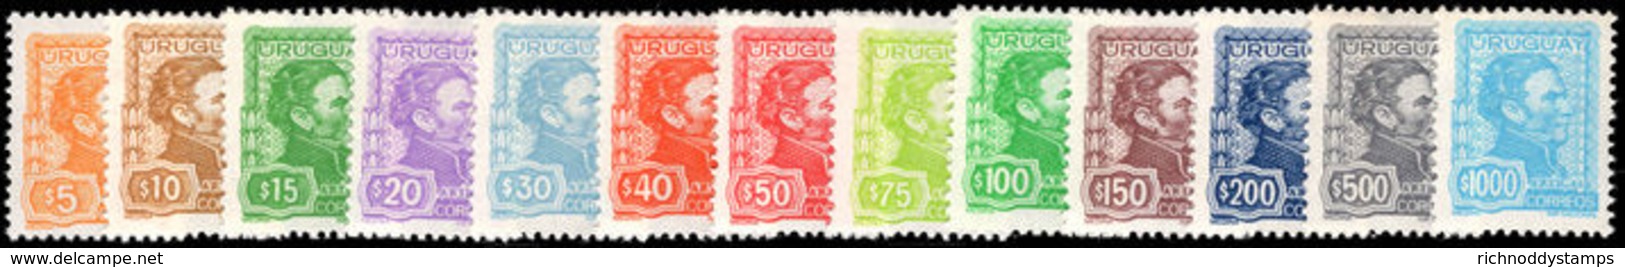 Uruguay 1972 General Jose Artigas Set Unmounted Mint. - Uruguay